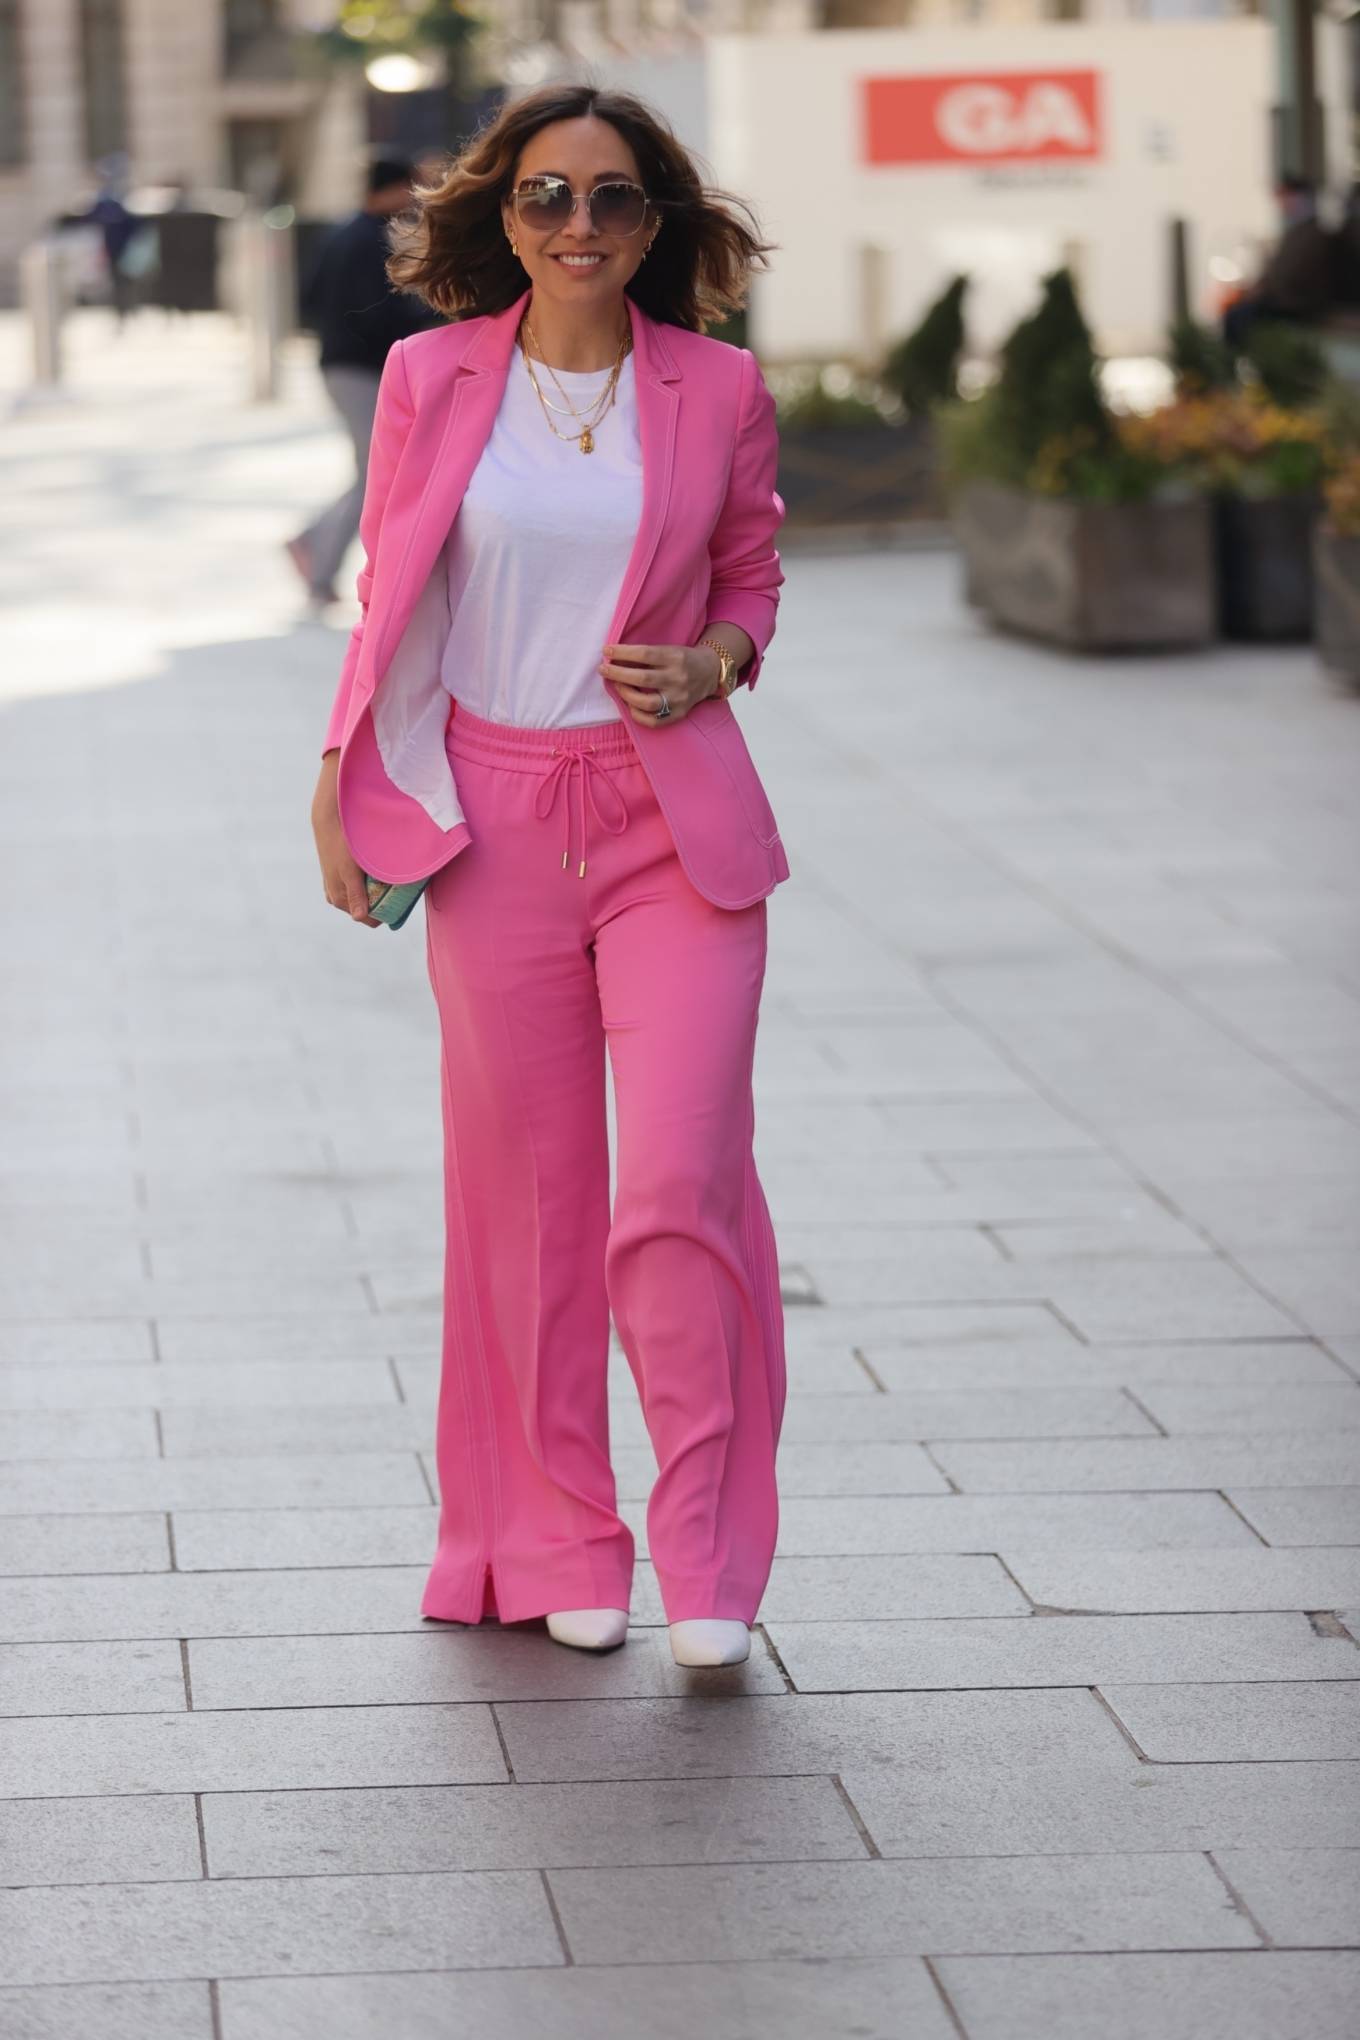 Myleene Klass 2021 : Myleene Klass – Out in pink on her Birthday at Smooth radio in London-08